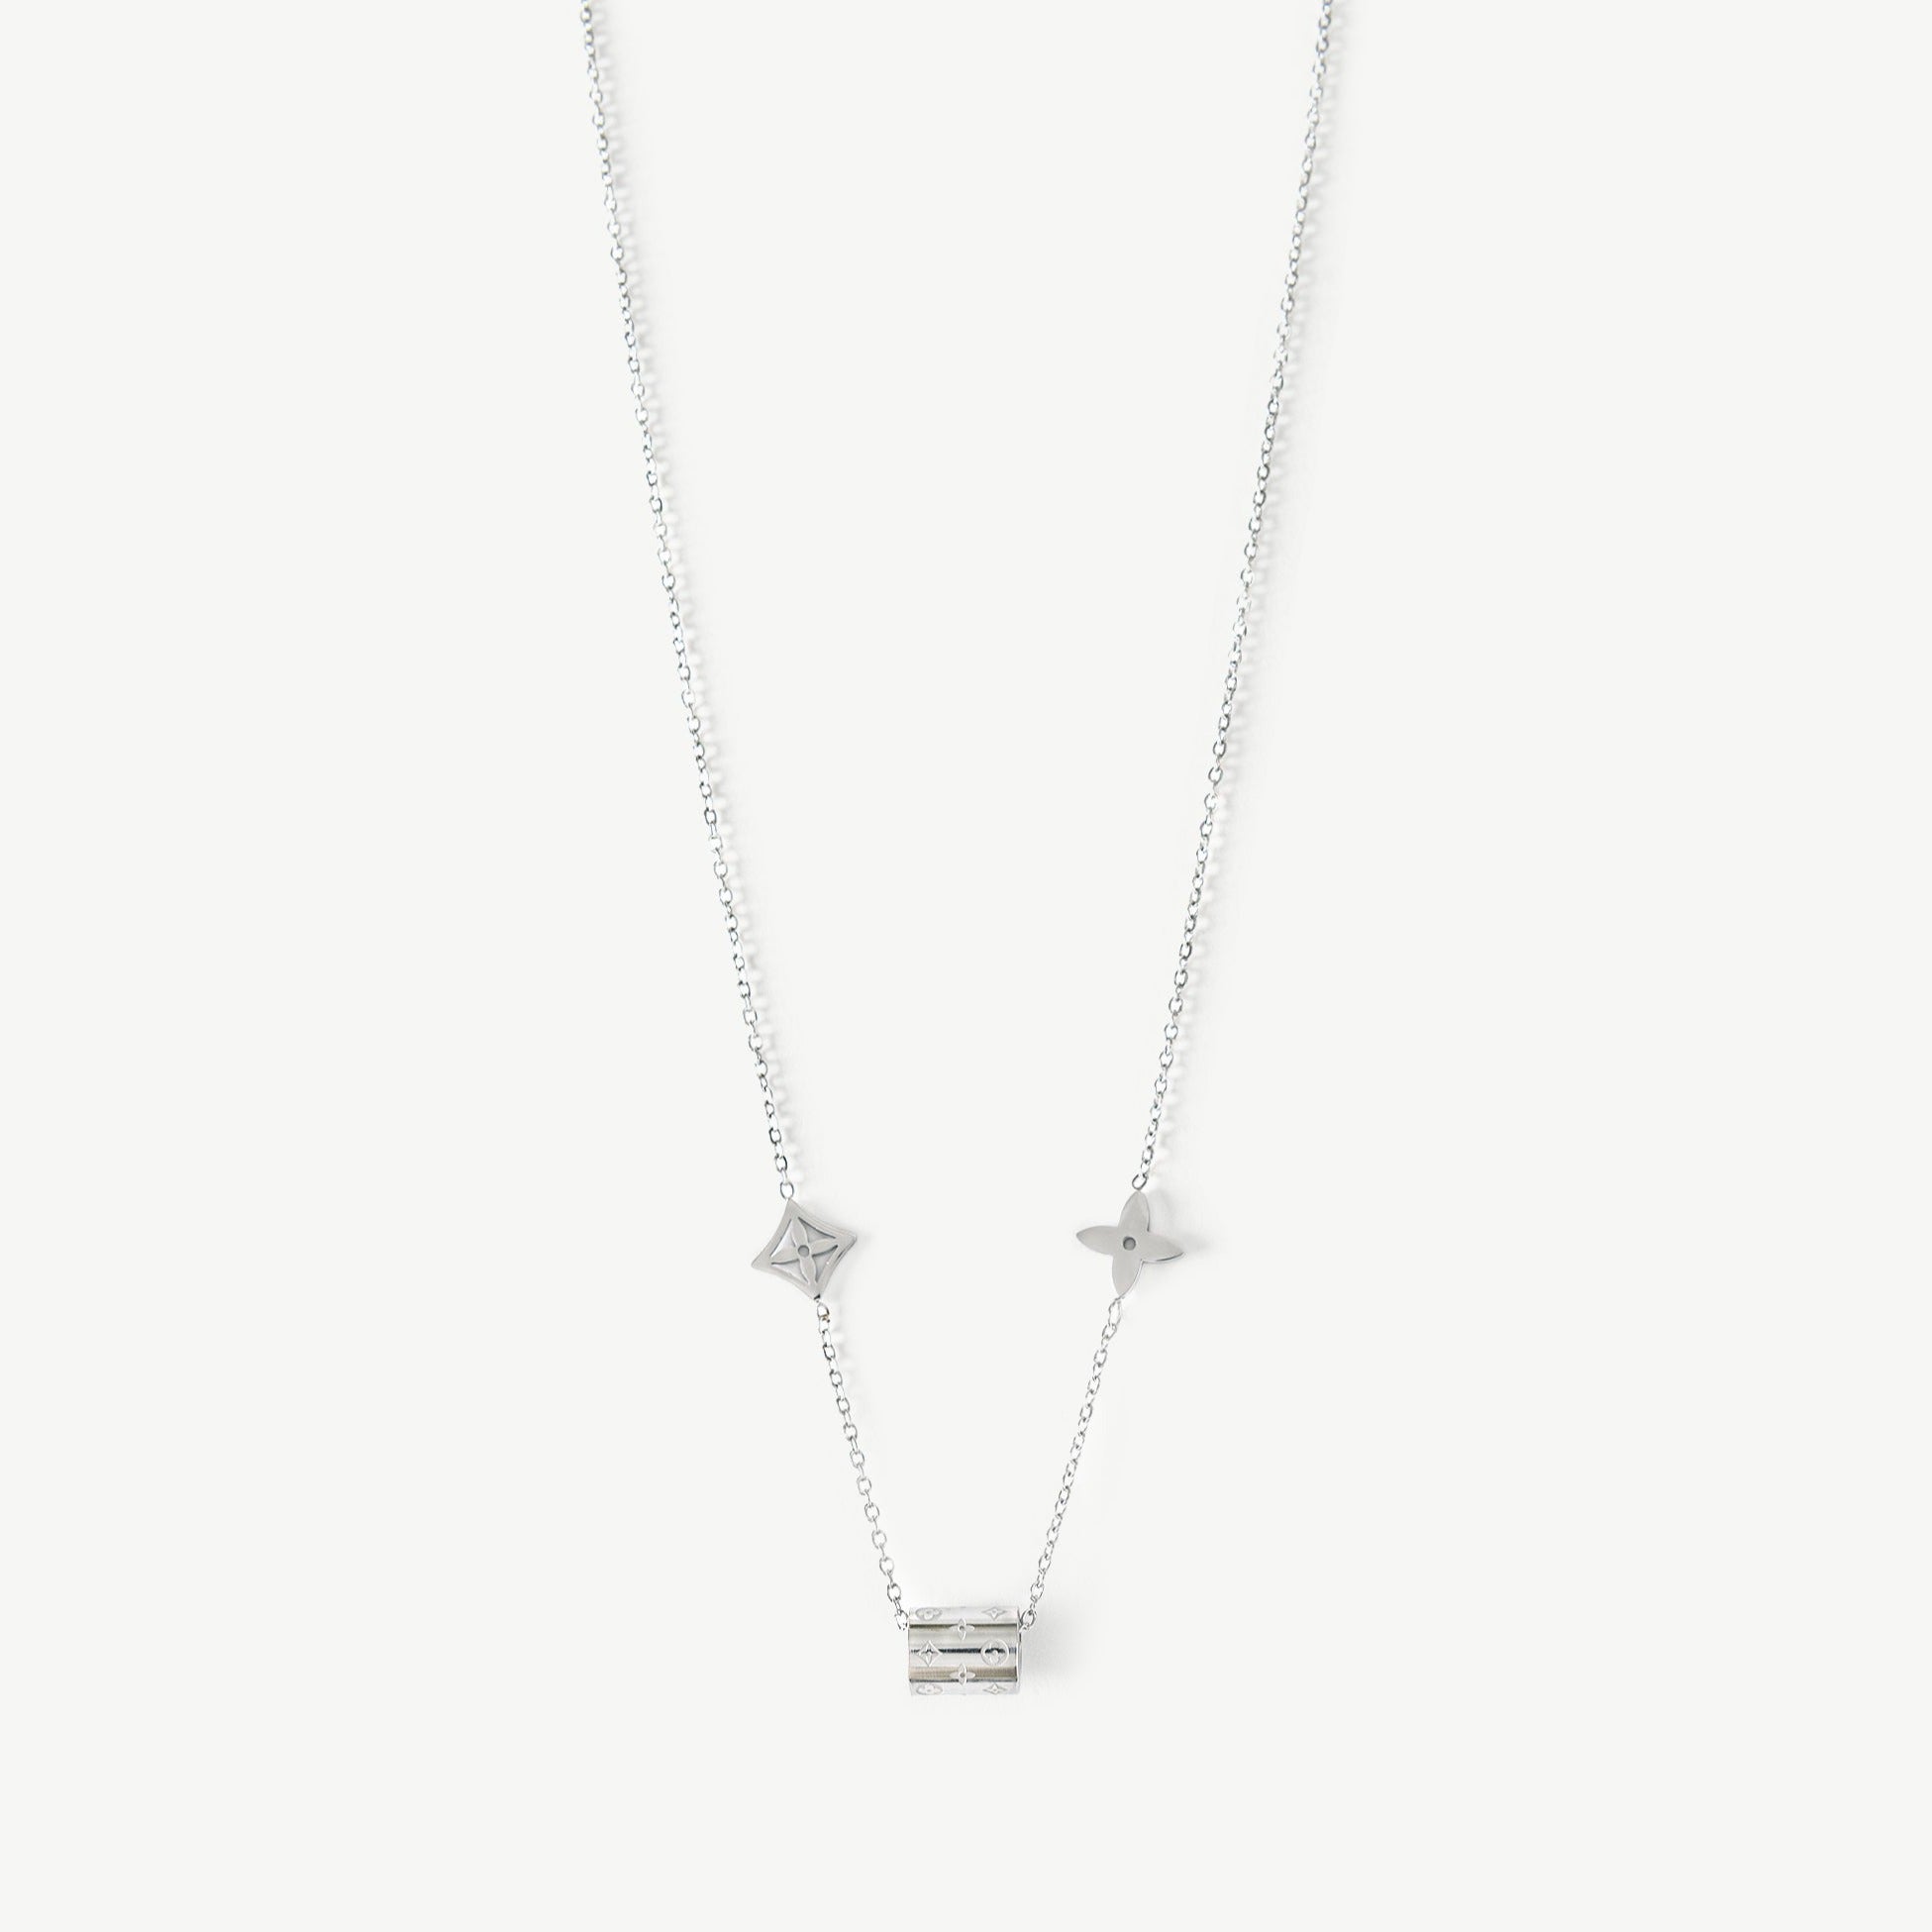 Silver Medusa Necklace - EzaVision - Necklace - Silver Medusa Necklace